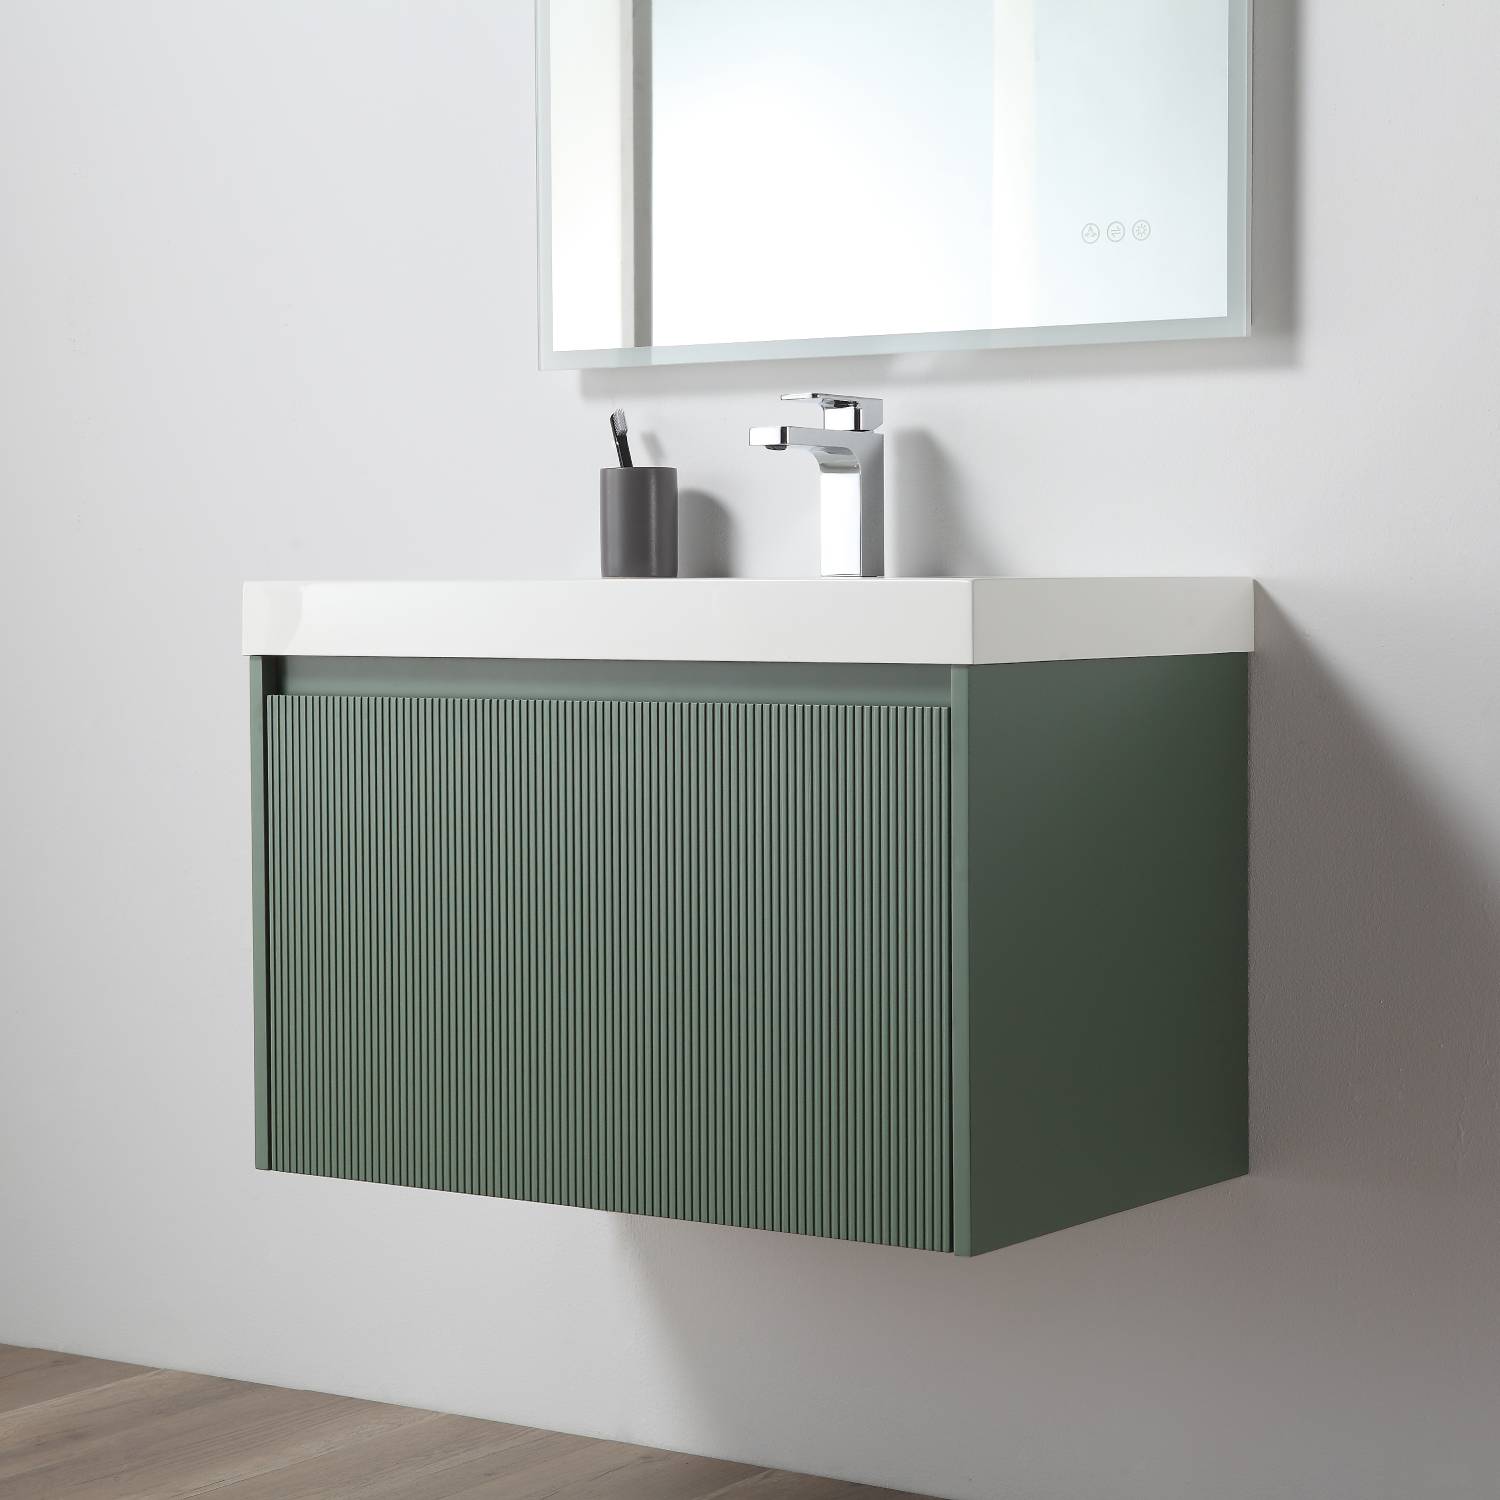 Positano 30" Bathroom Vanity  #size_30"  #color_aventurine green